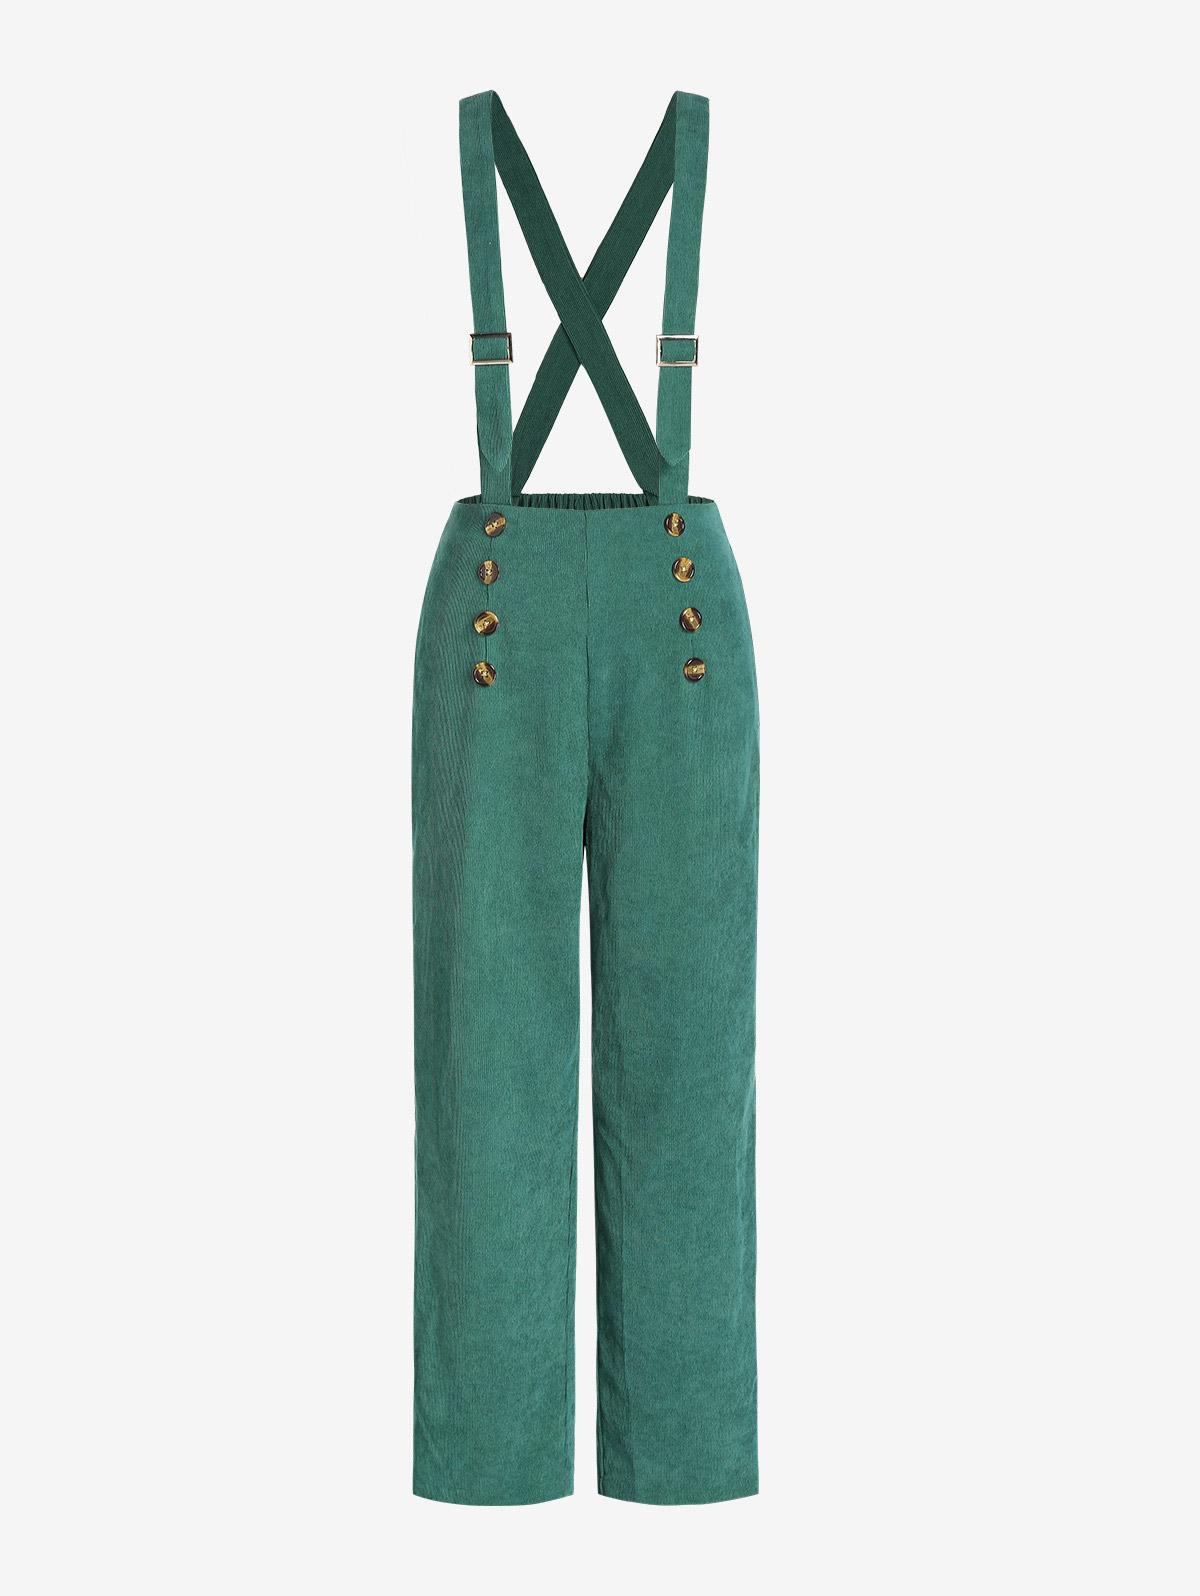 ZAFUL Buttoned Corduroy Suspender Pants L Deep green